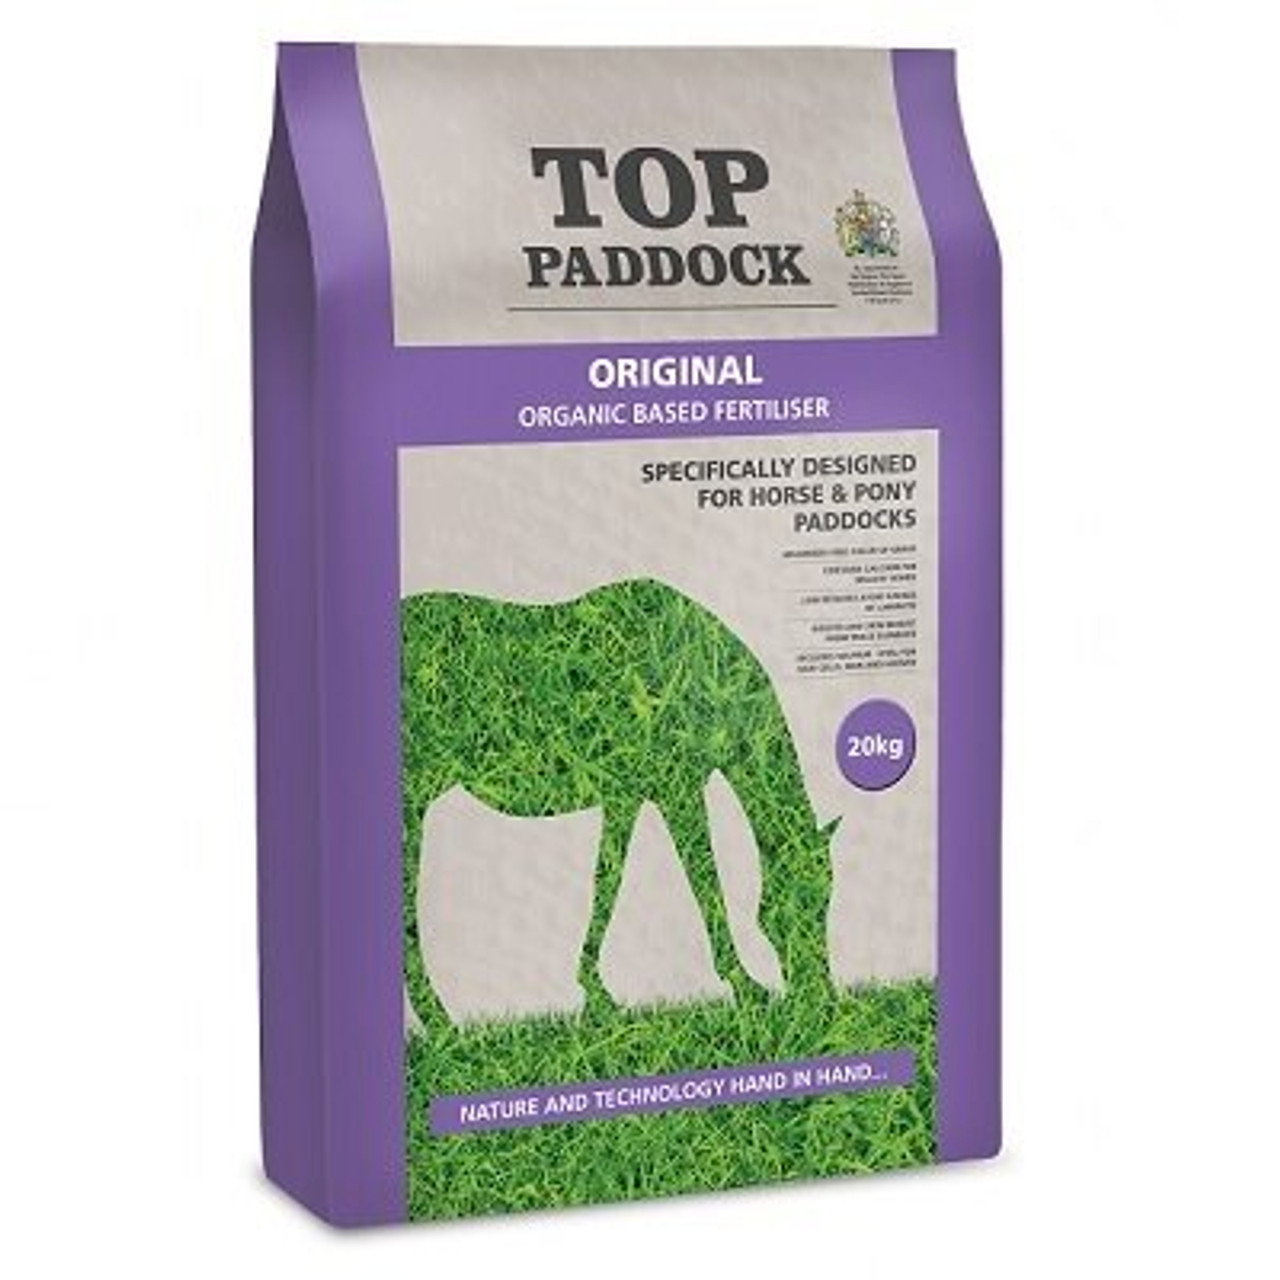 Top Paddock Fertiliser 20kg - Stable Supplies | Wormers-Direct